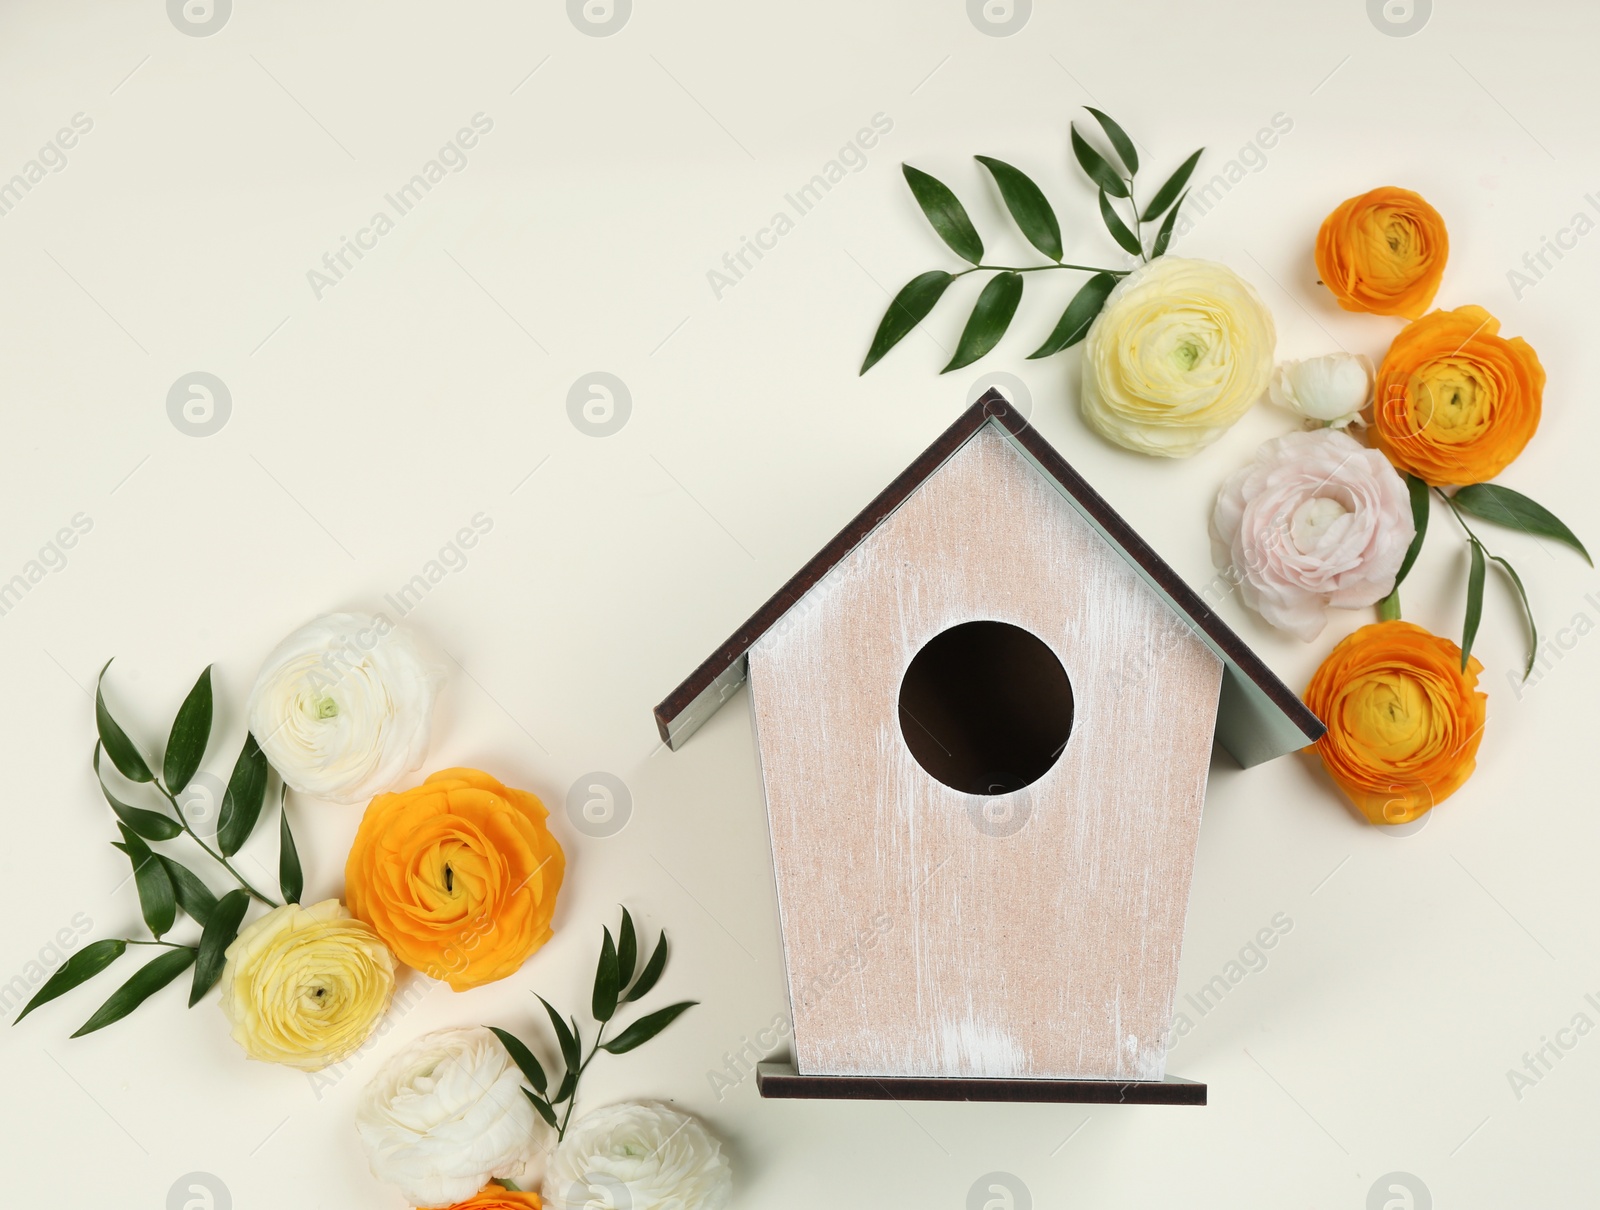 Photo of Stylish bird house and fresh flowers on beige background, flat lay